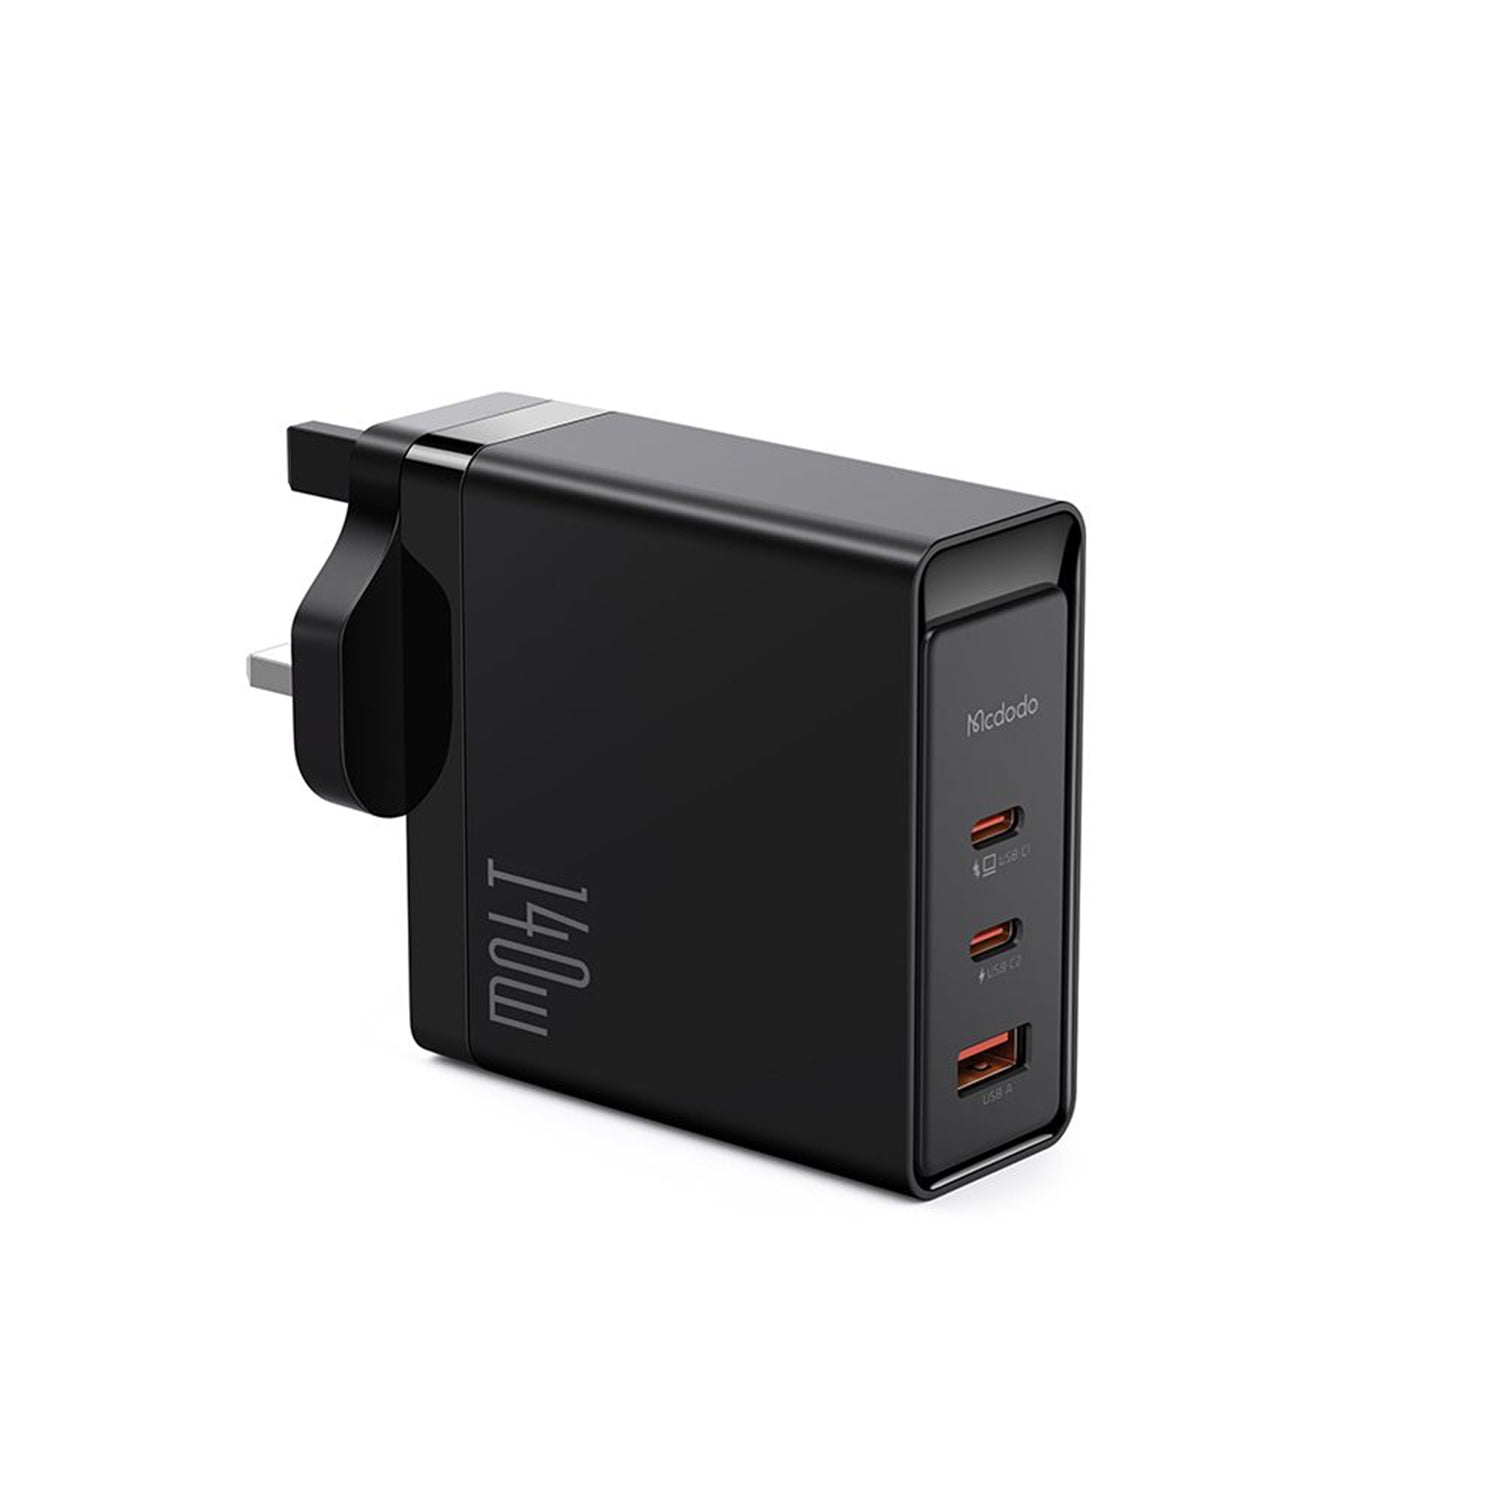 Mcdodo 140W GaN 5 Pro Dual Type-C + USB Fast Charger (UK Plug), Black